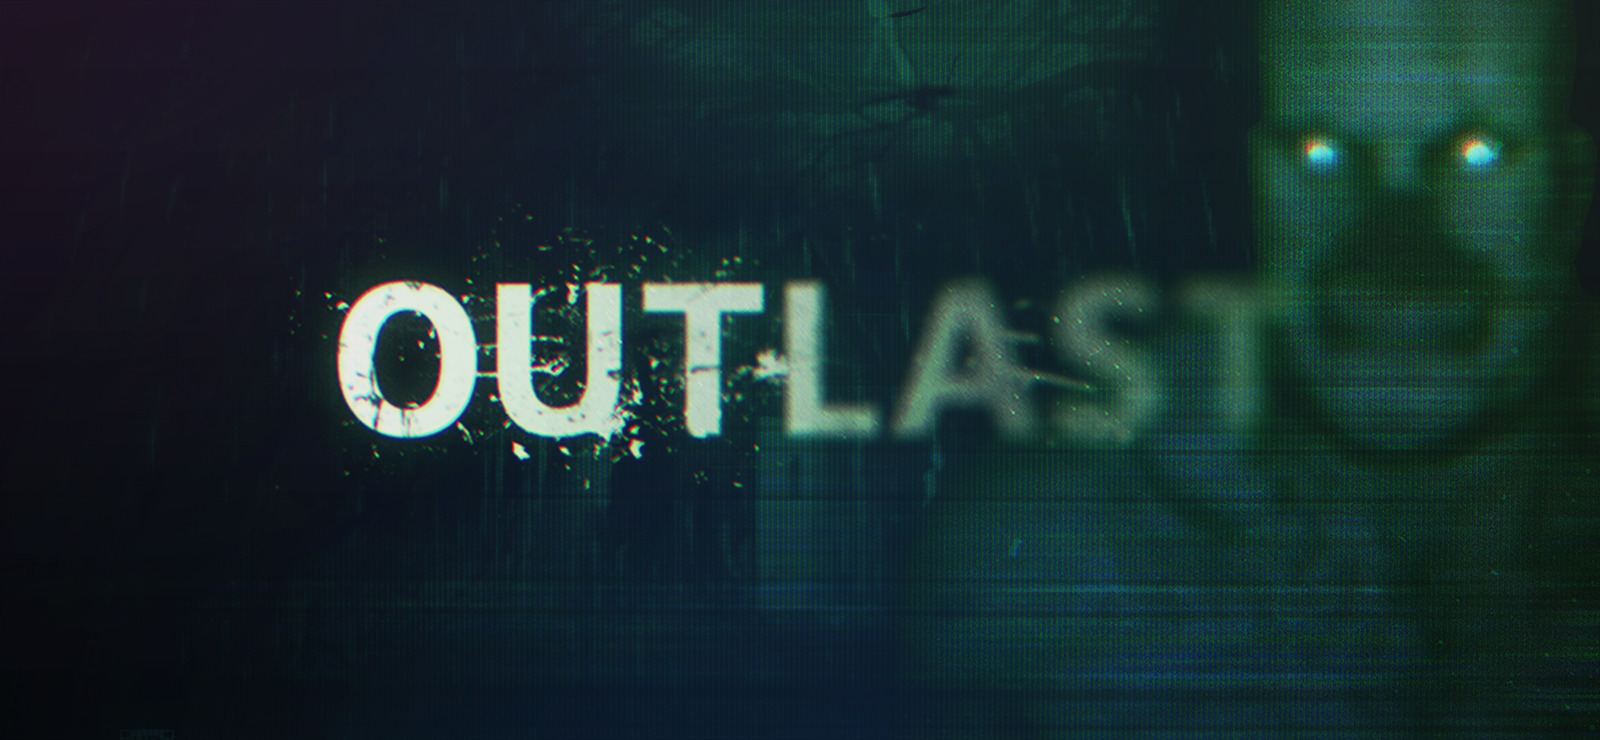 outlast ii download free